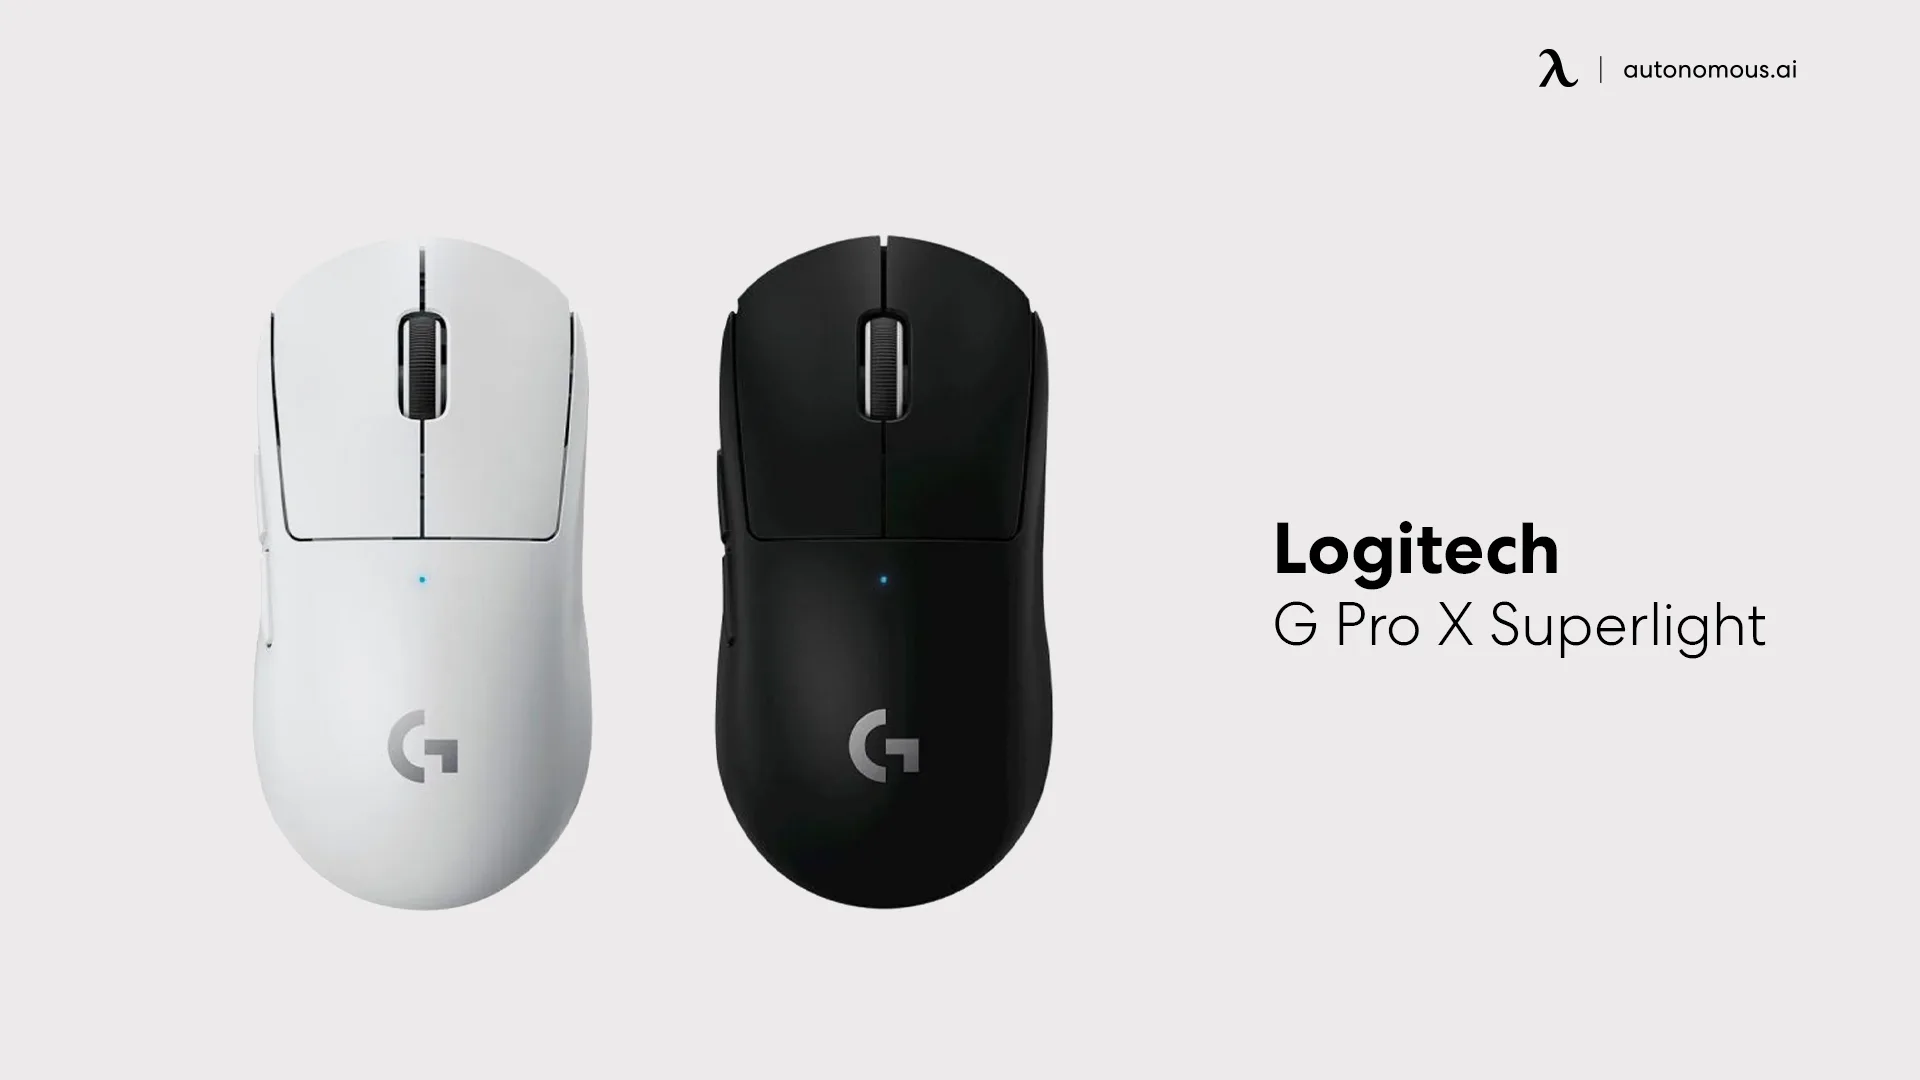 Logitech G Pro X Superlight wireless gaming mouse